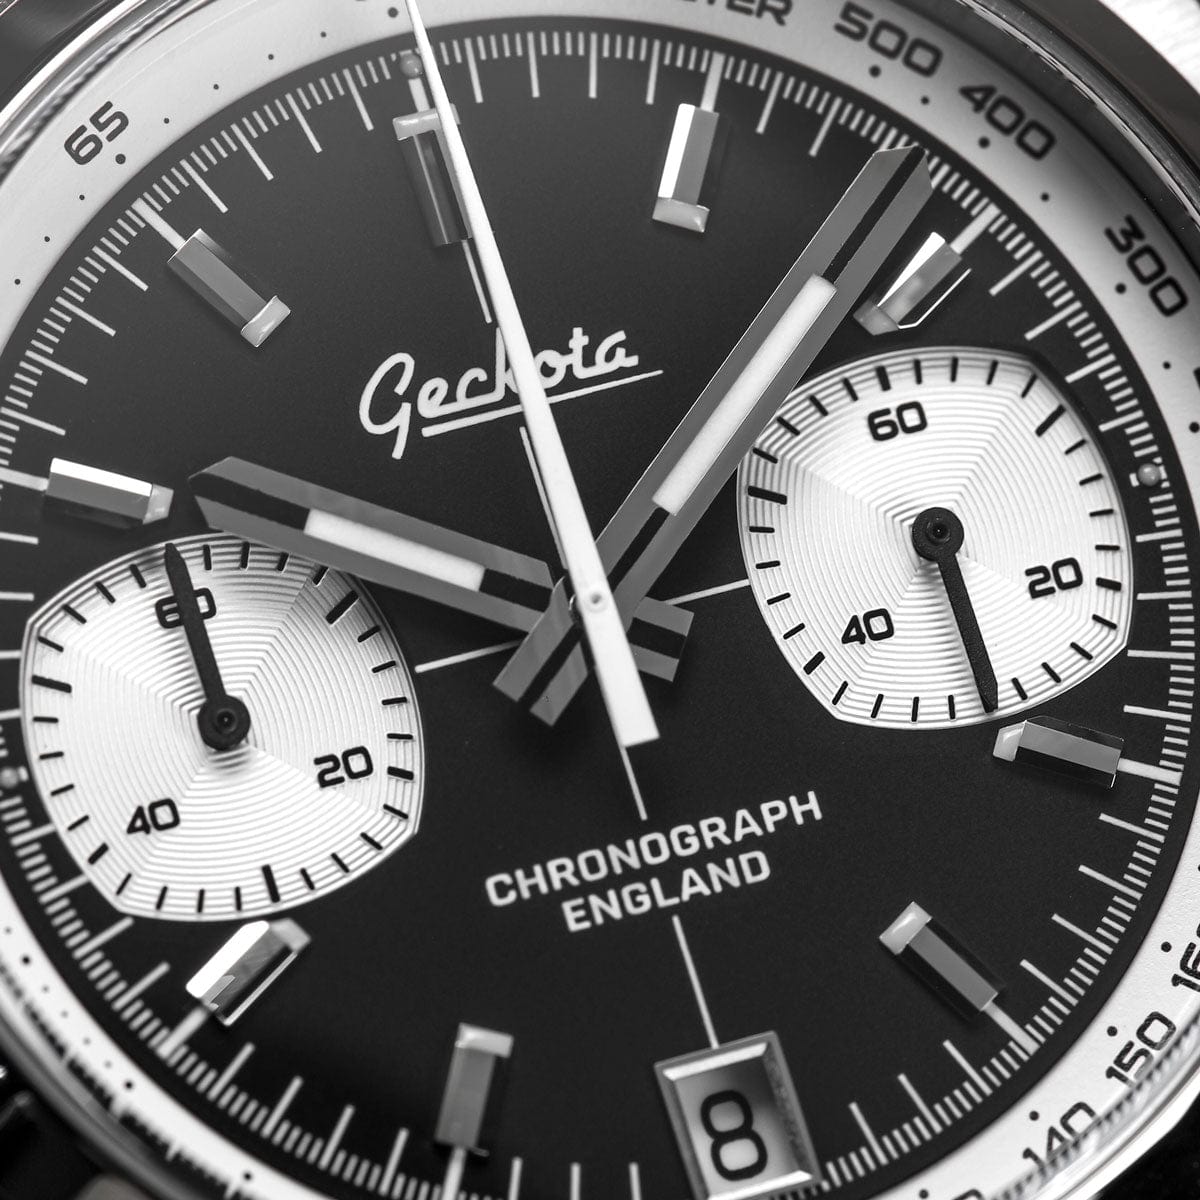 Geckota Chronotimer Racing Chronograph Watch Classic Reverse Panda - LIKE NEW